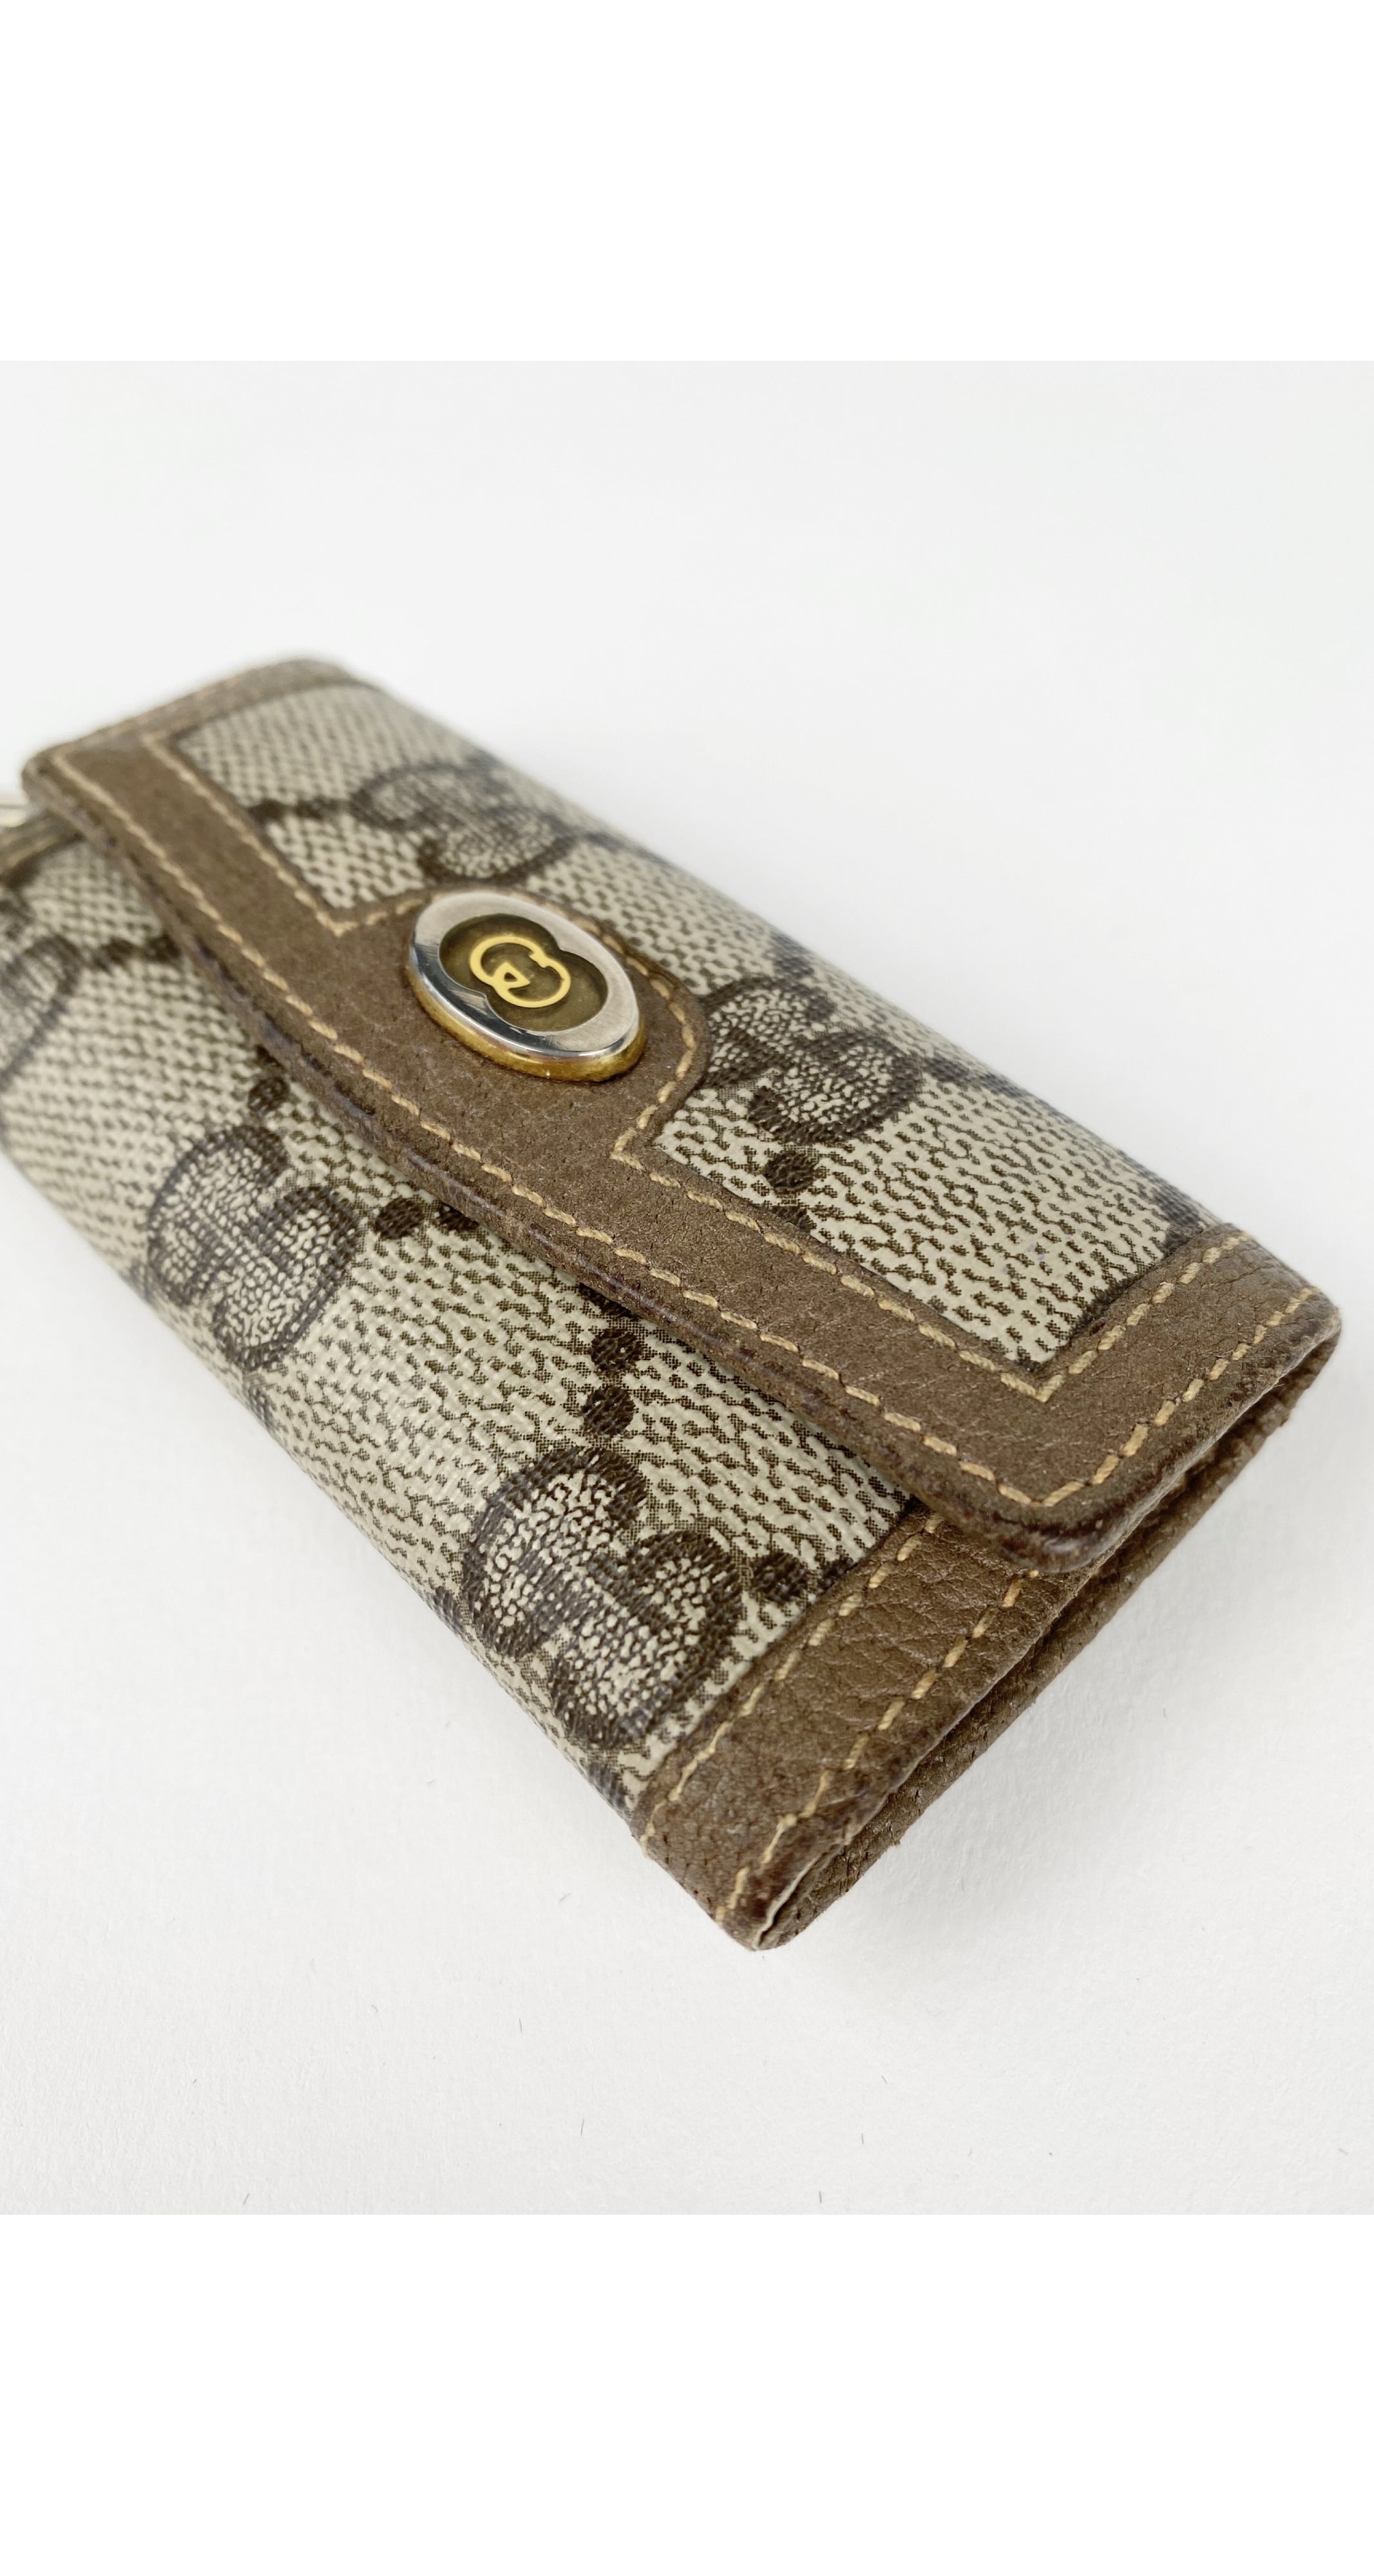 AUTHENTIC Gucci Key case Key holder GG Navy Canvas Leather Vintage Piece🌸🌸